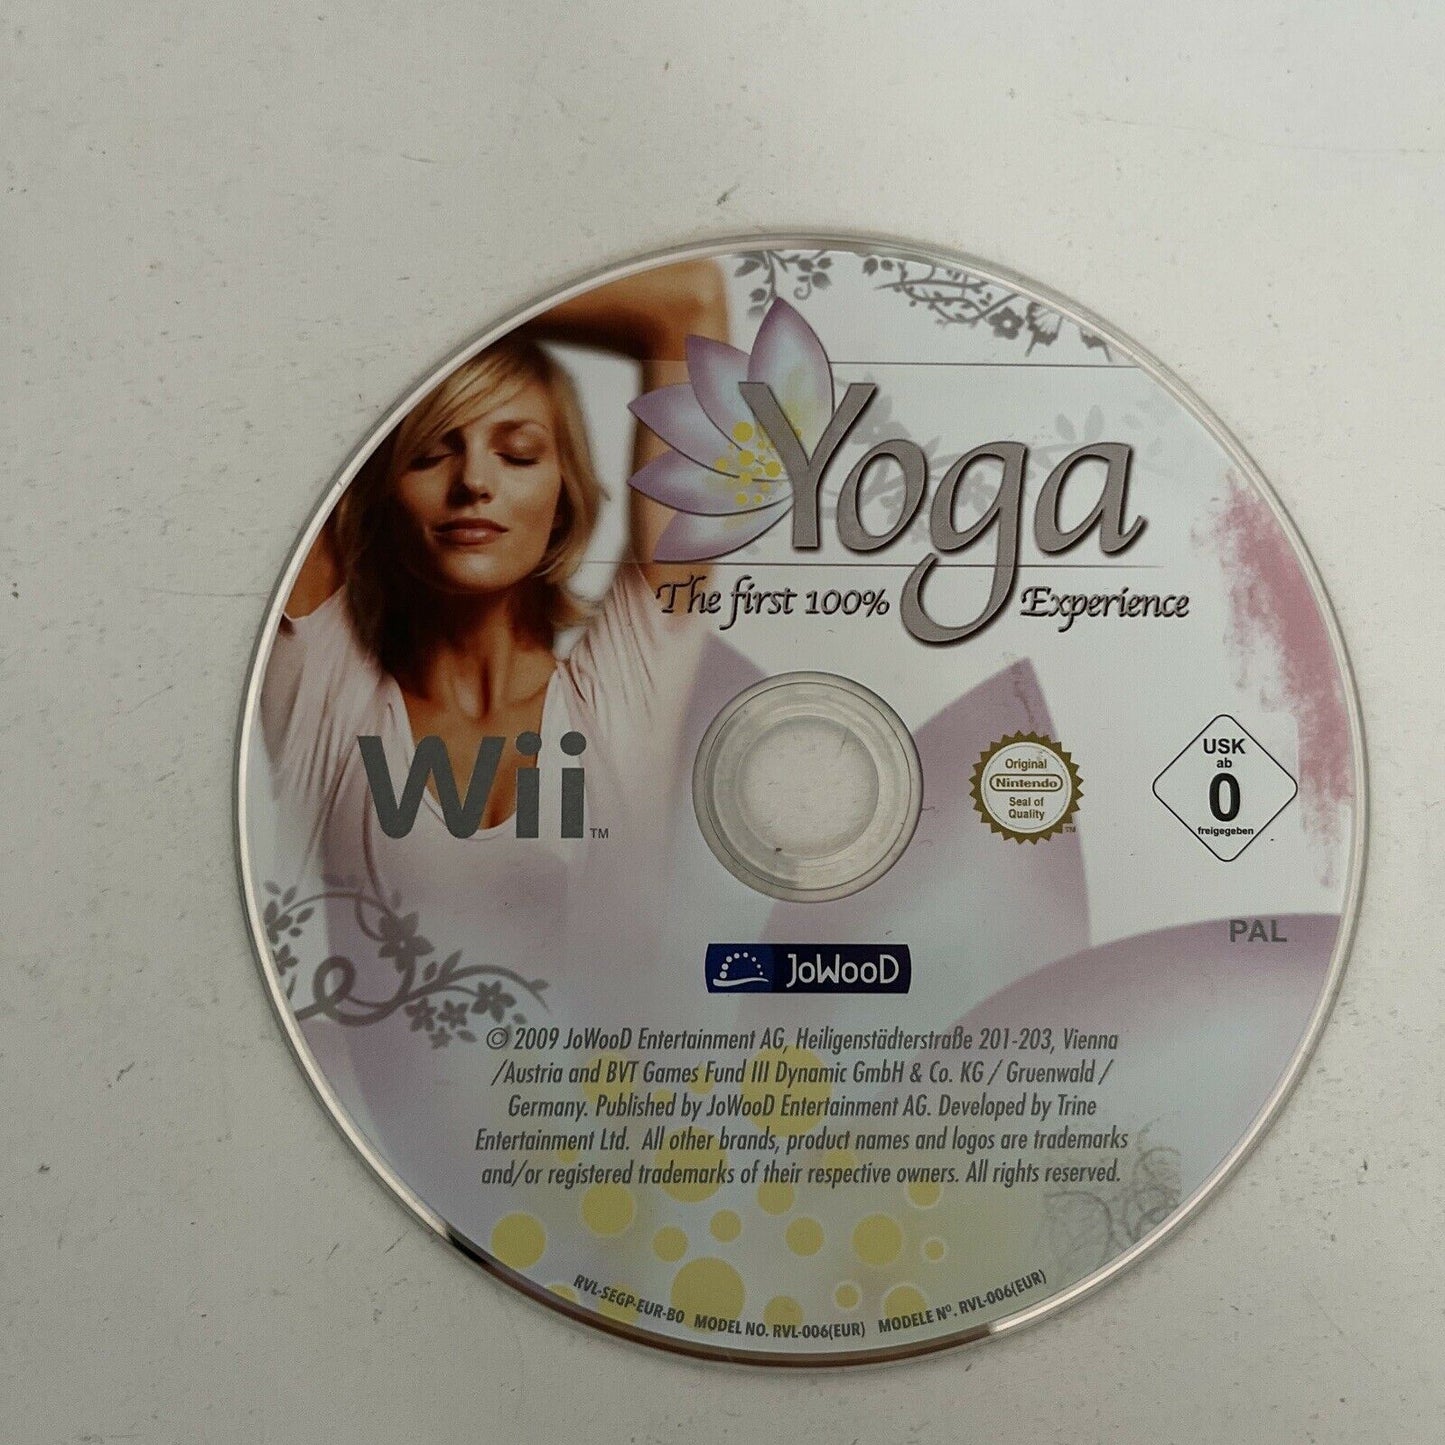 Yoga - Nintendo Wii PAL Customise & Monitor your Yoga Plan & Exercises w/ Guide